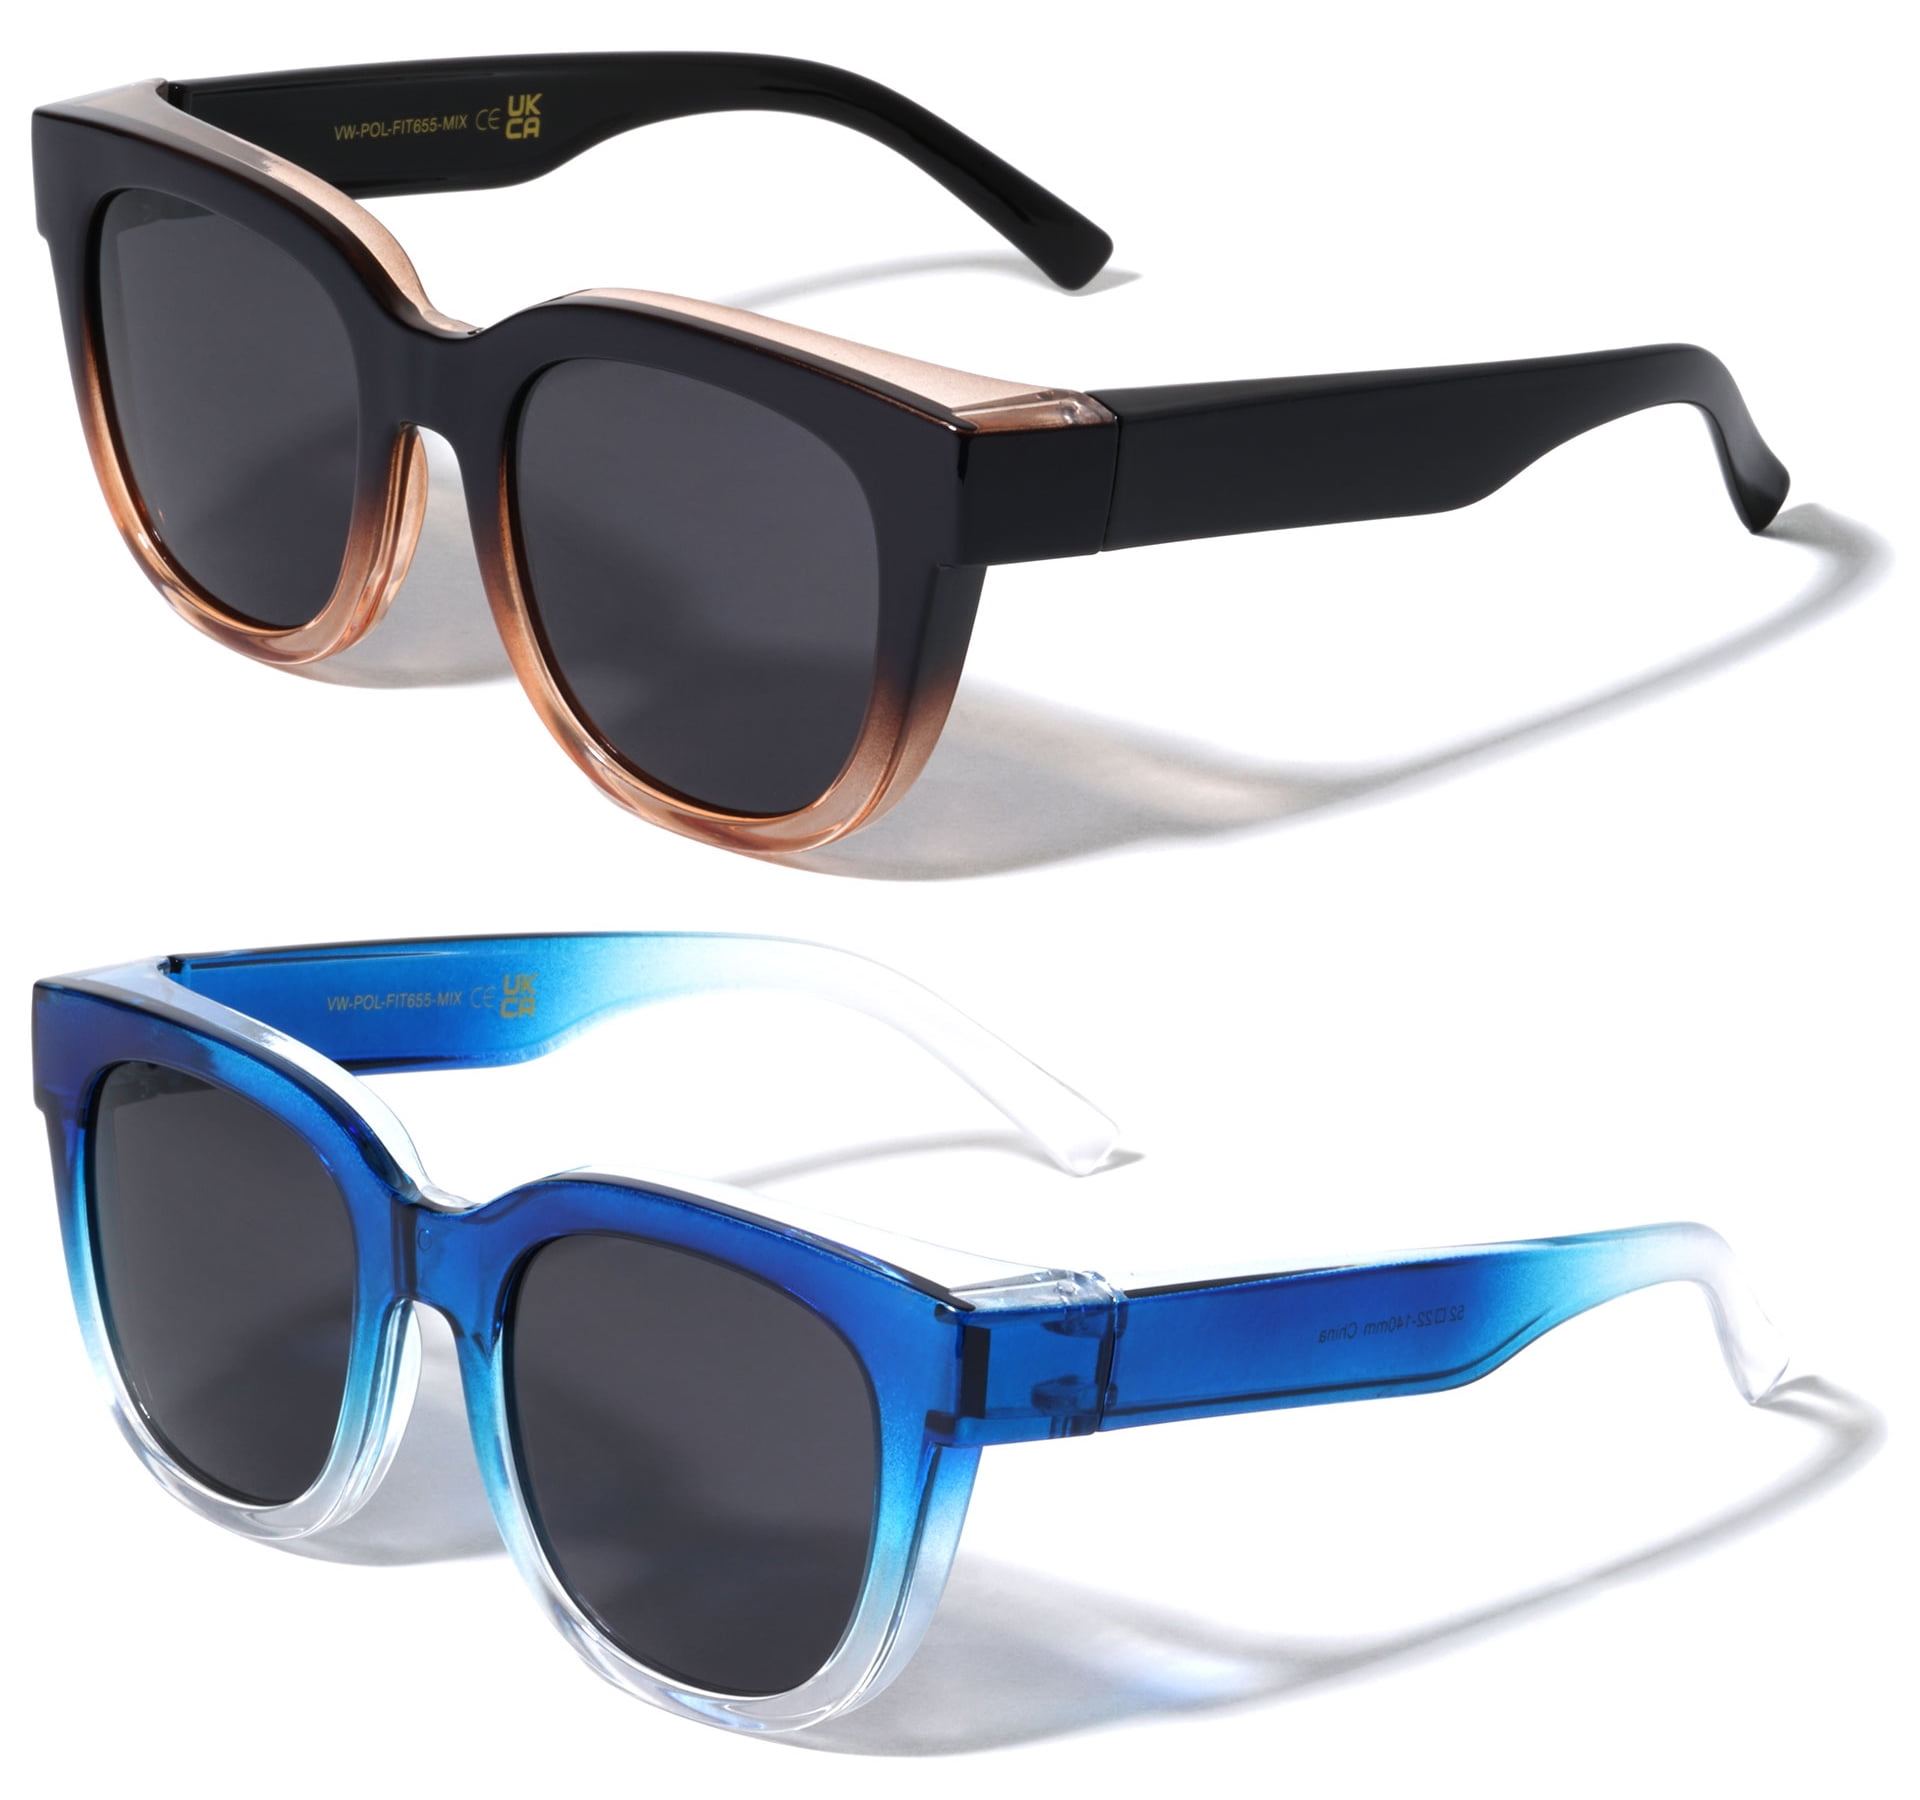 BattleVision HD Polarized Sunglasses by Atomic Beam 